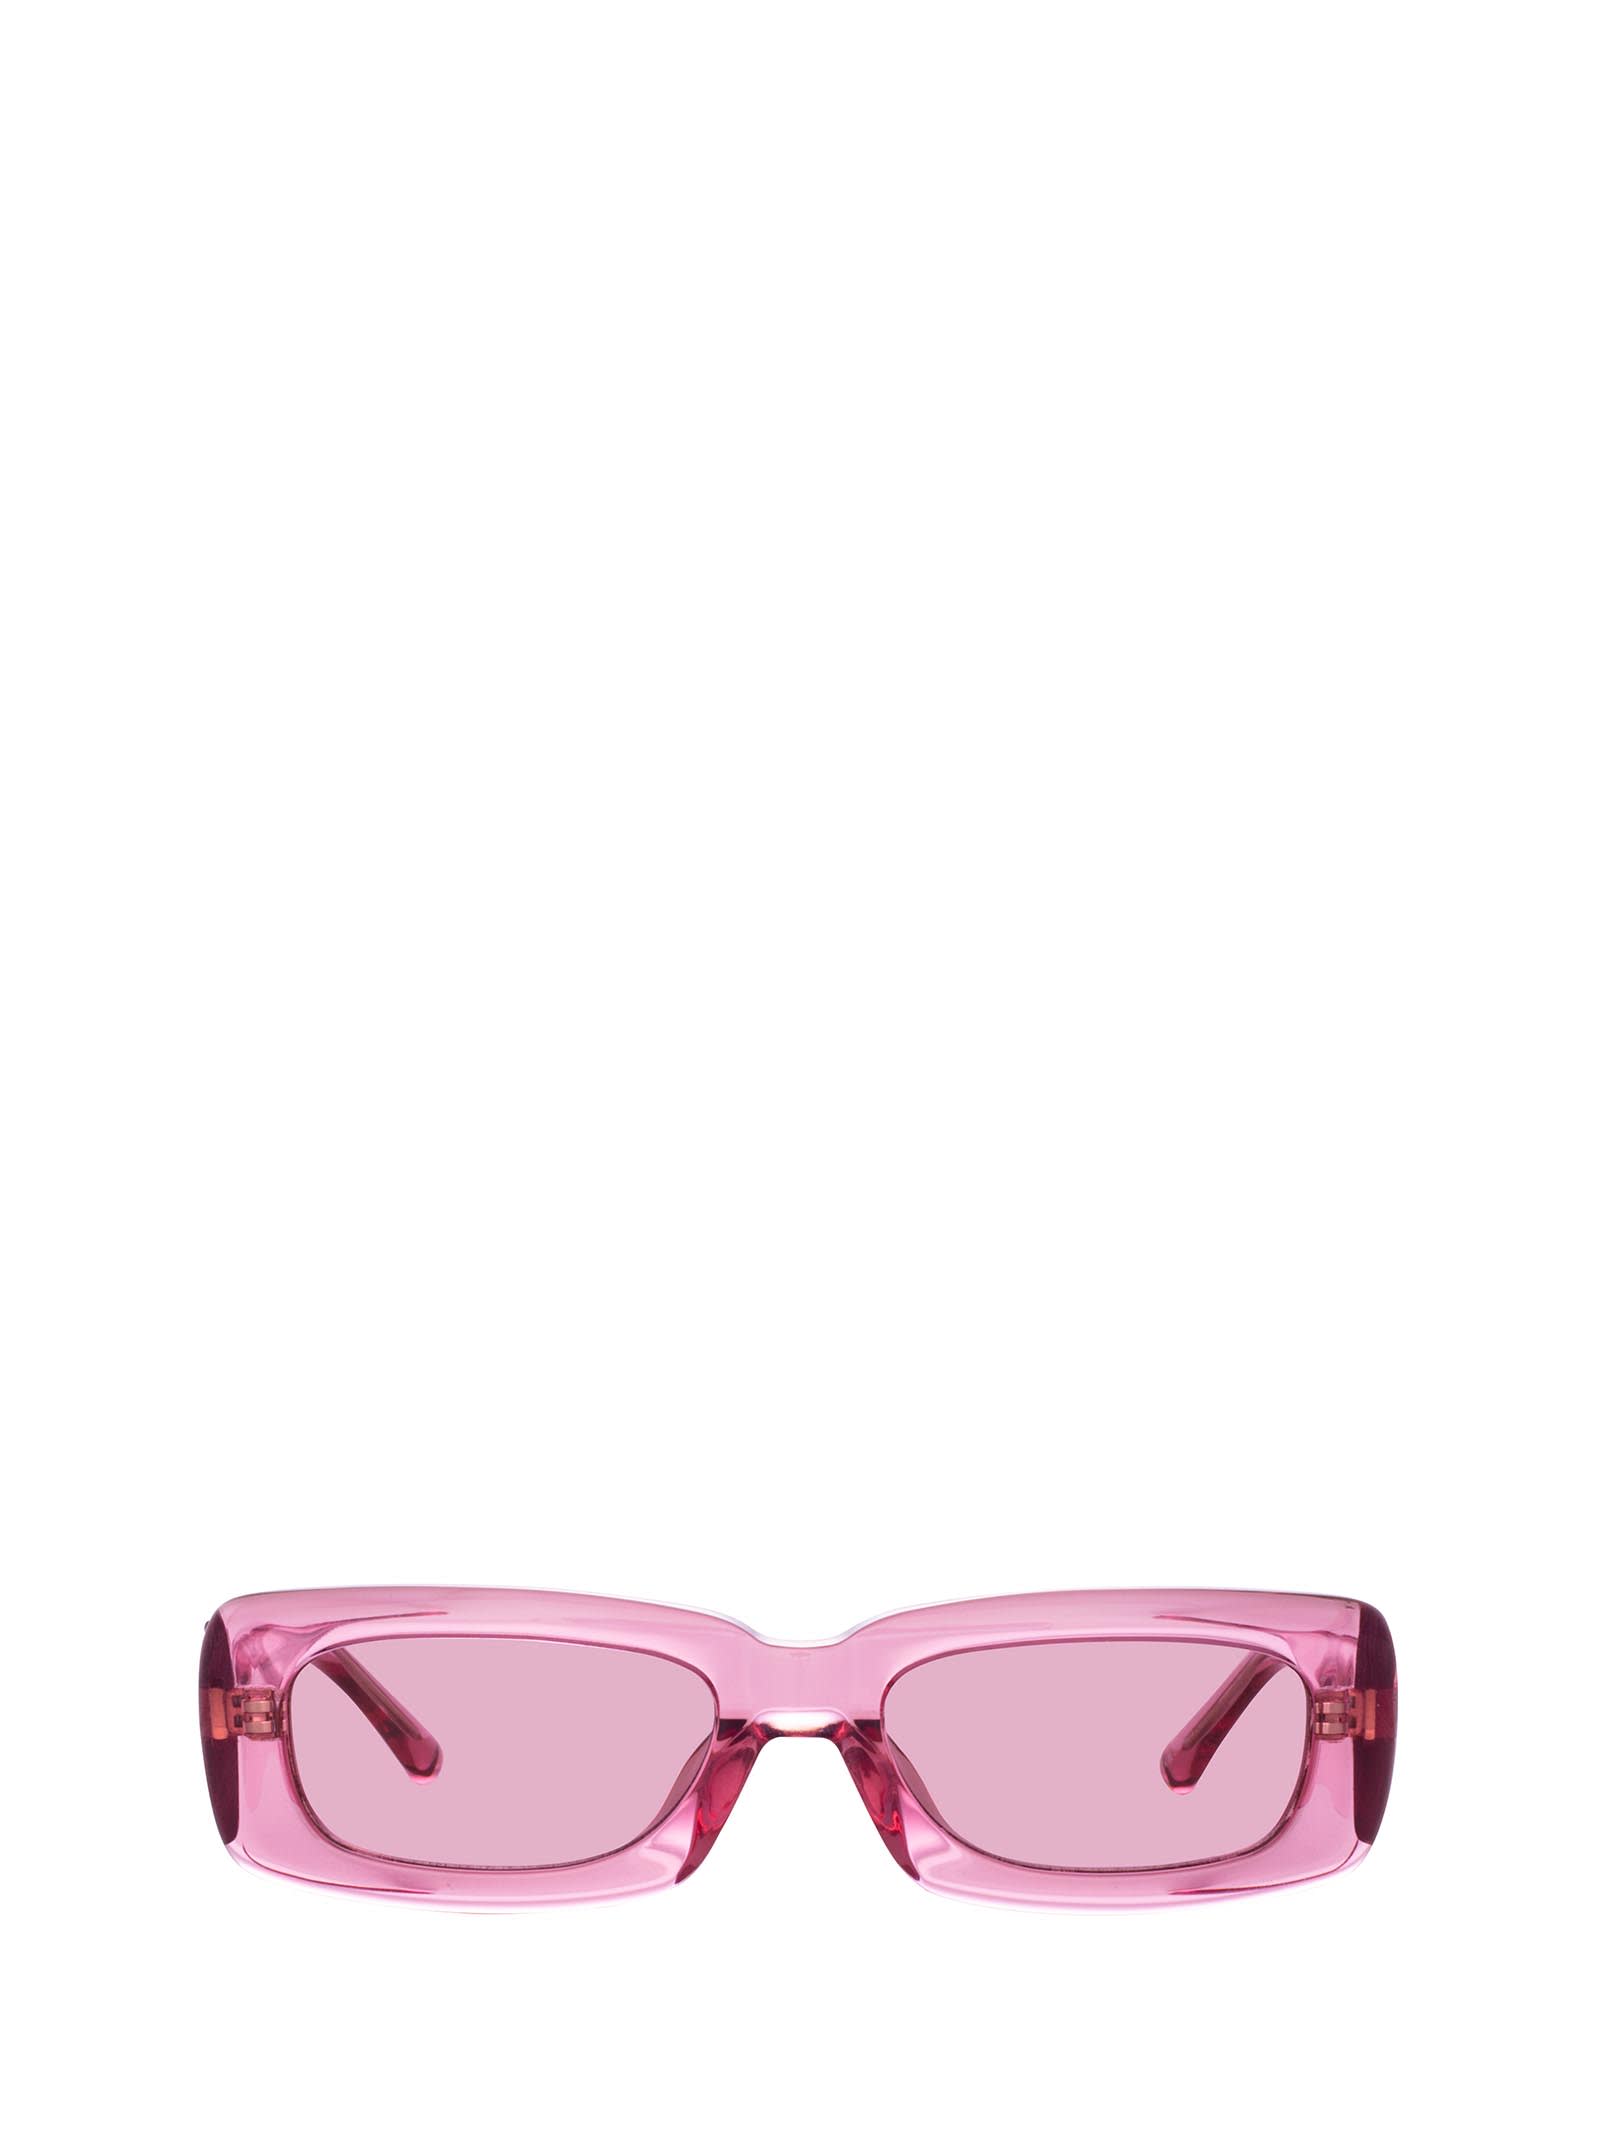 Linda Farrow Attico16 Powder Pink / Silver Sunglasses